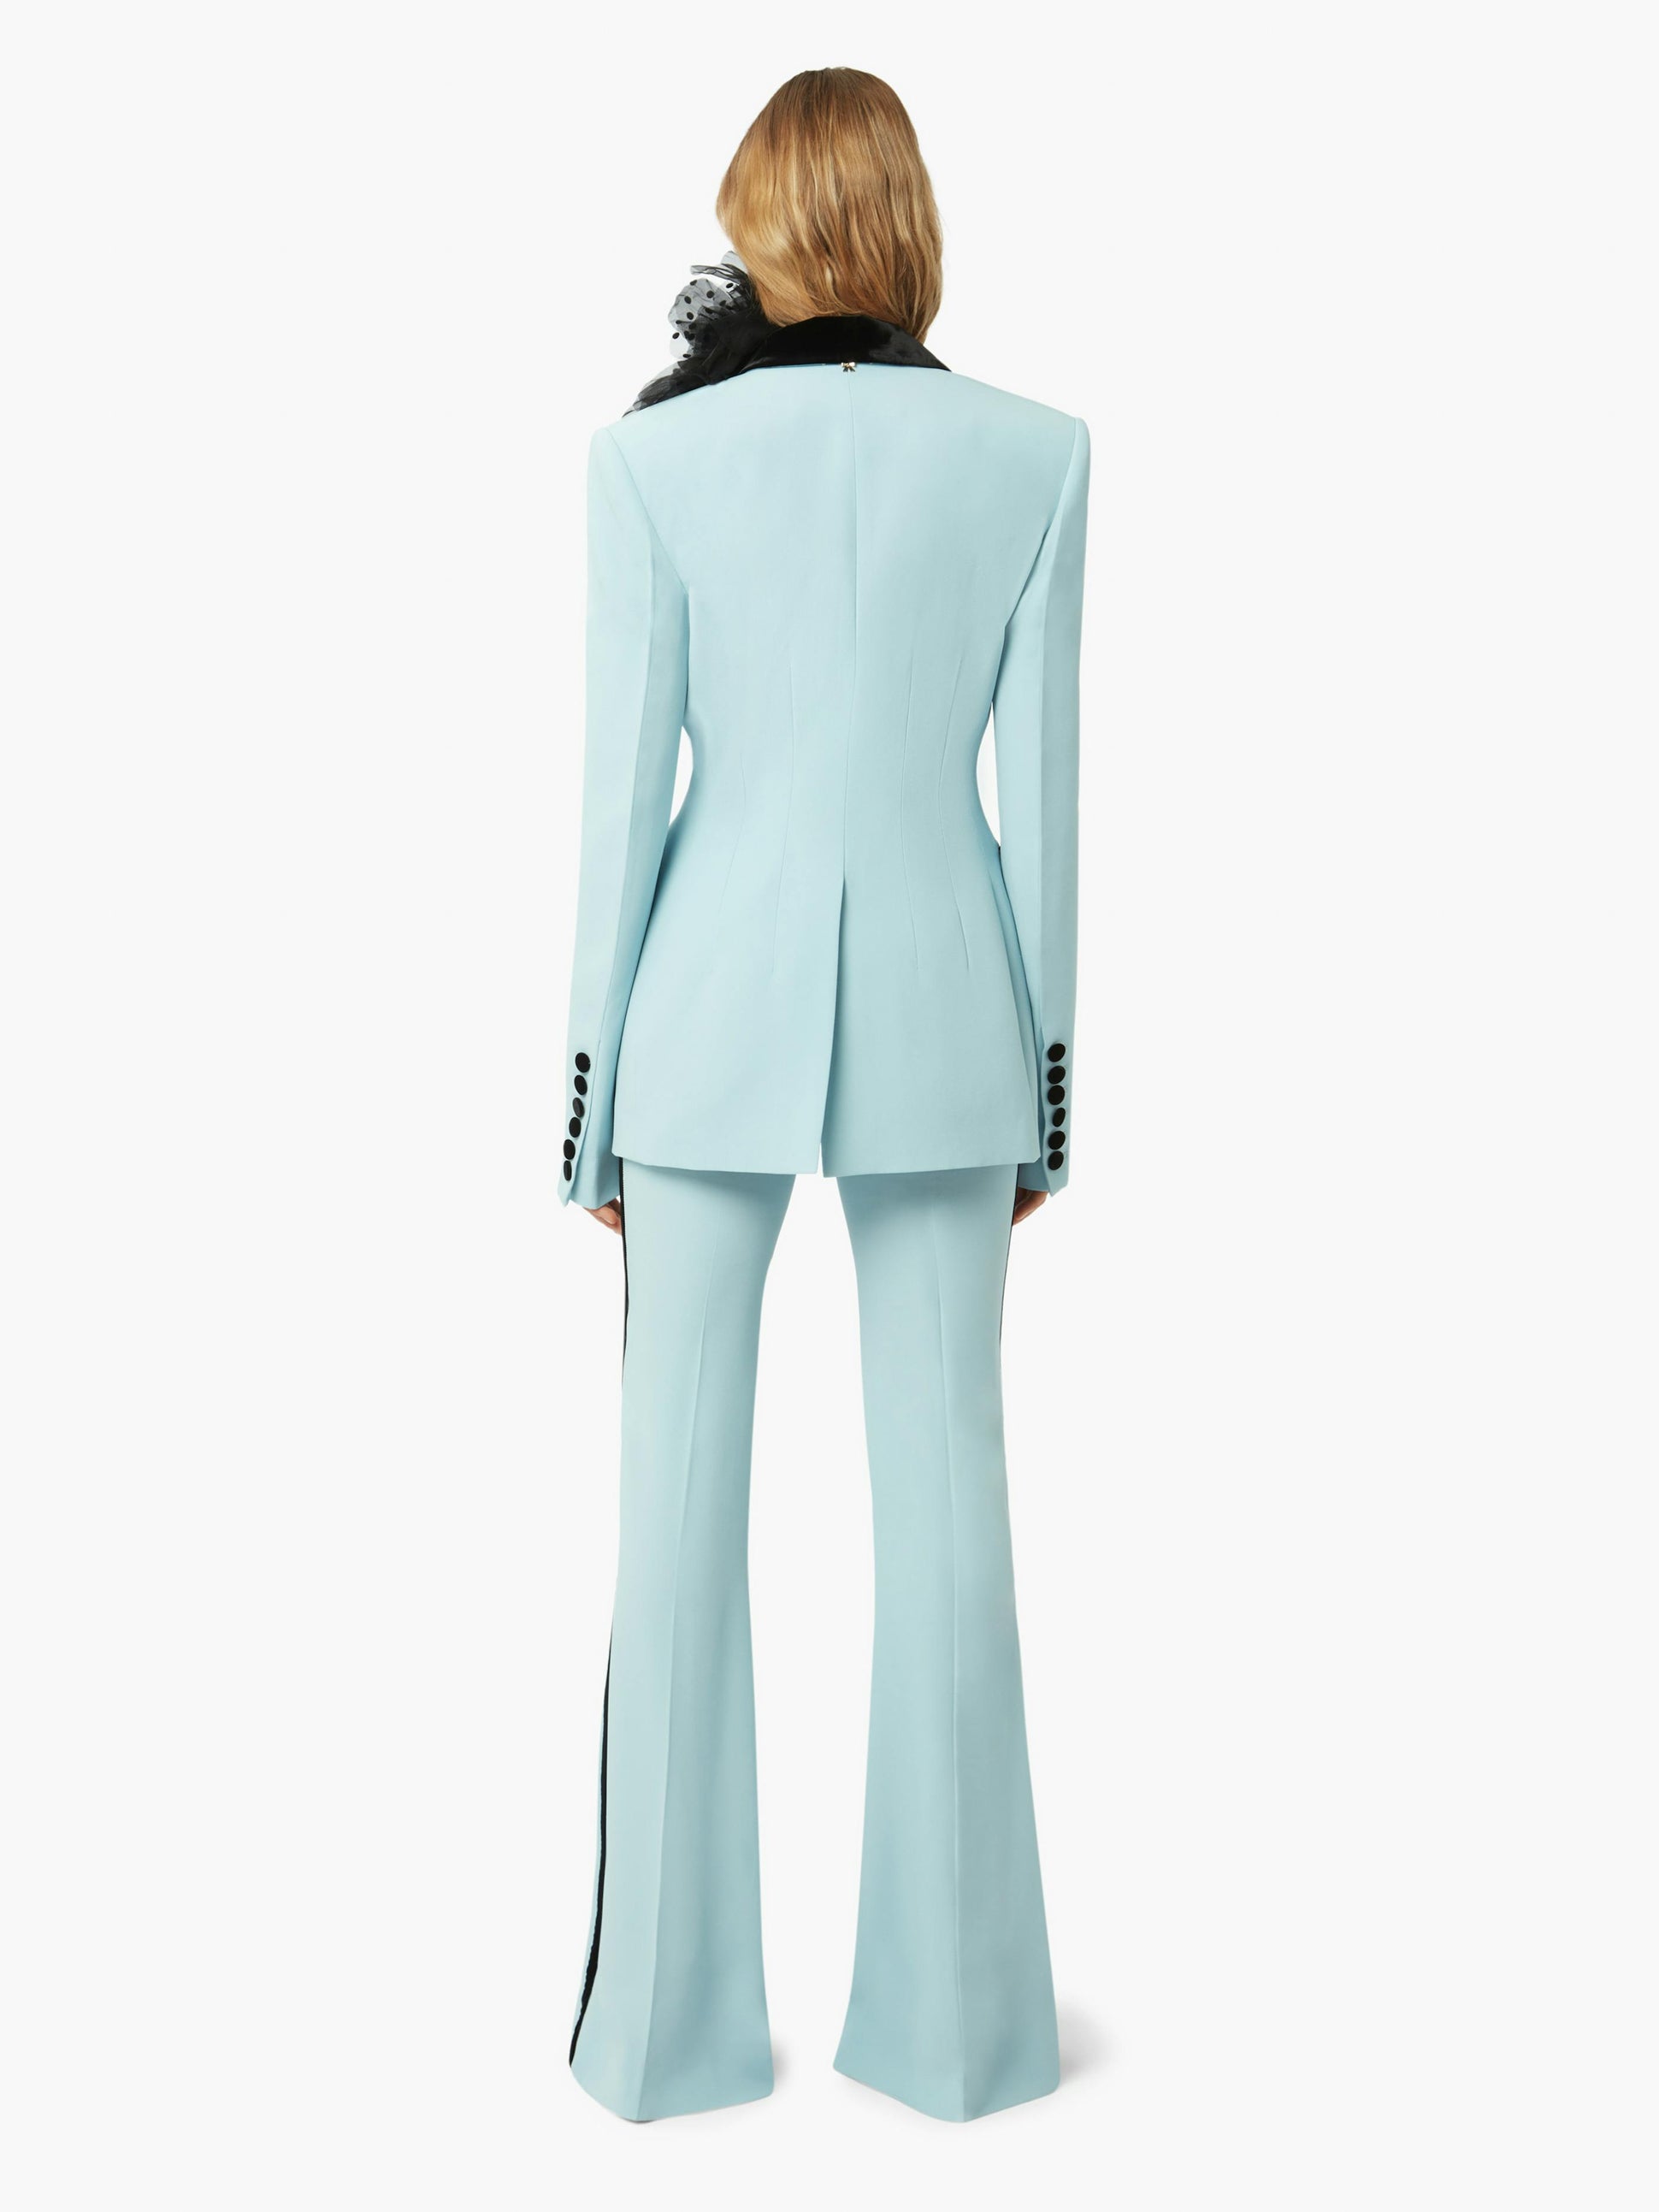 Tuxedo detail blazer in light blue- Nina Ricci